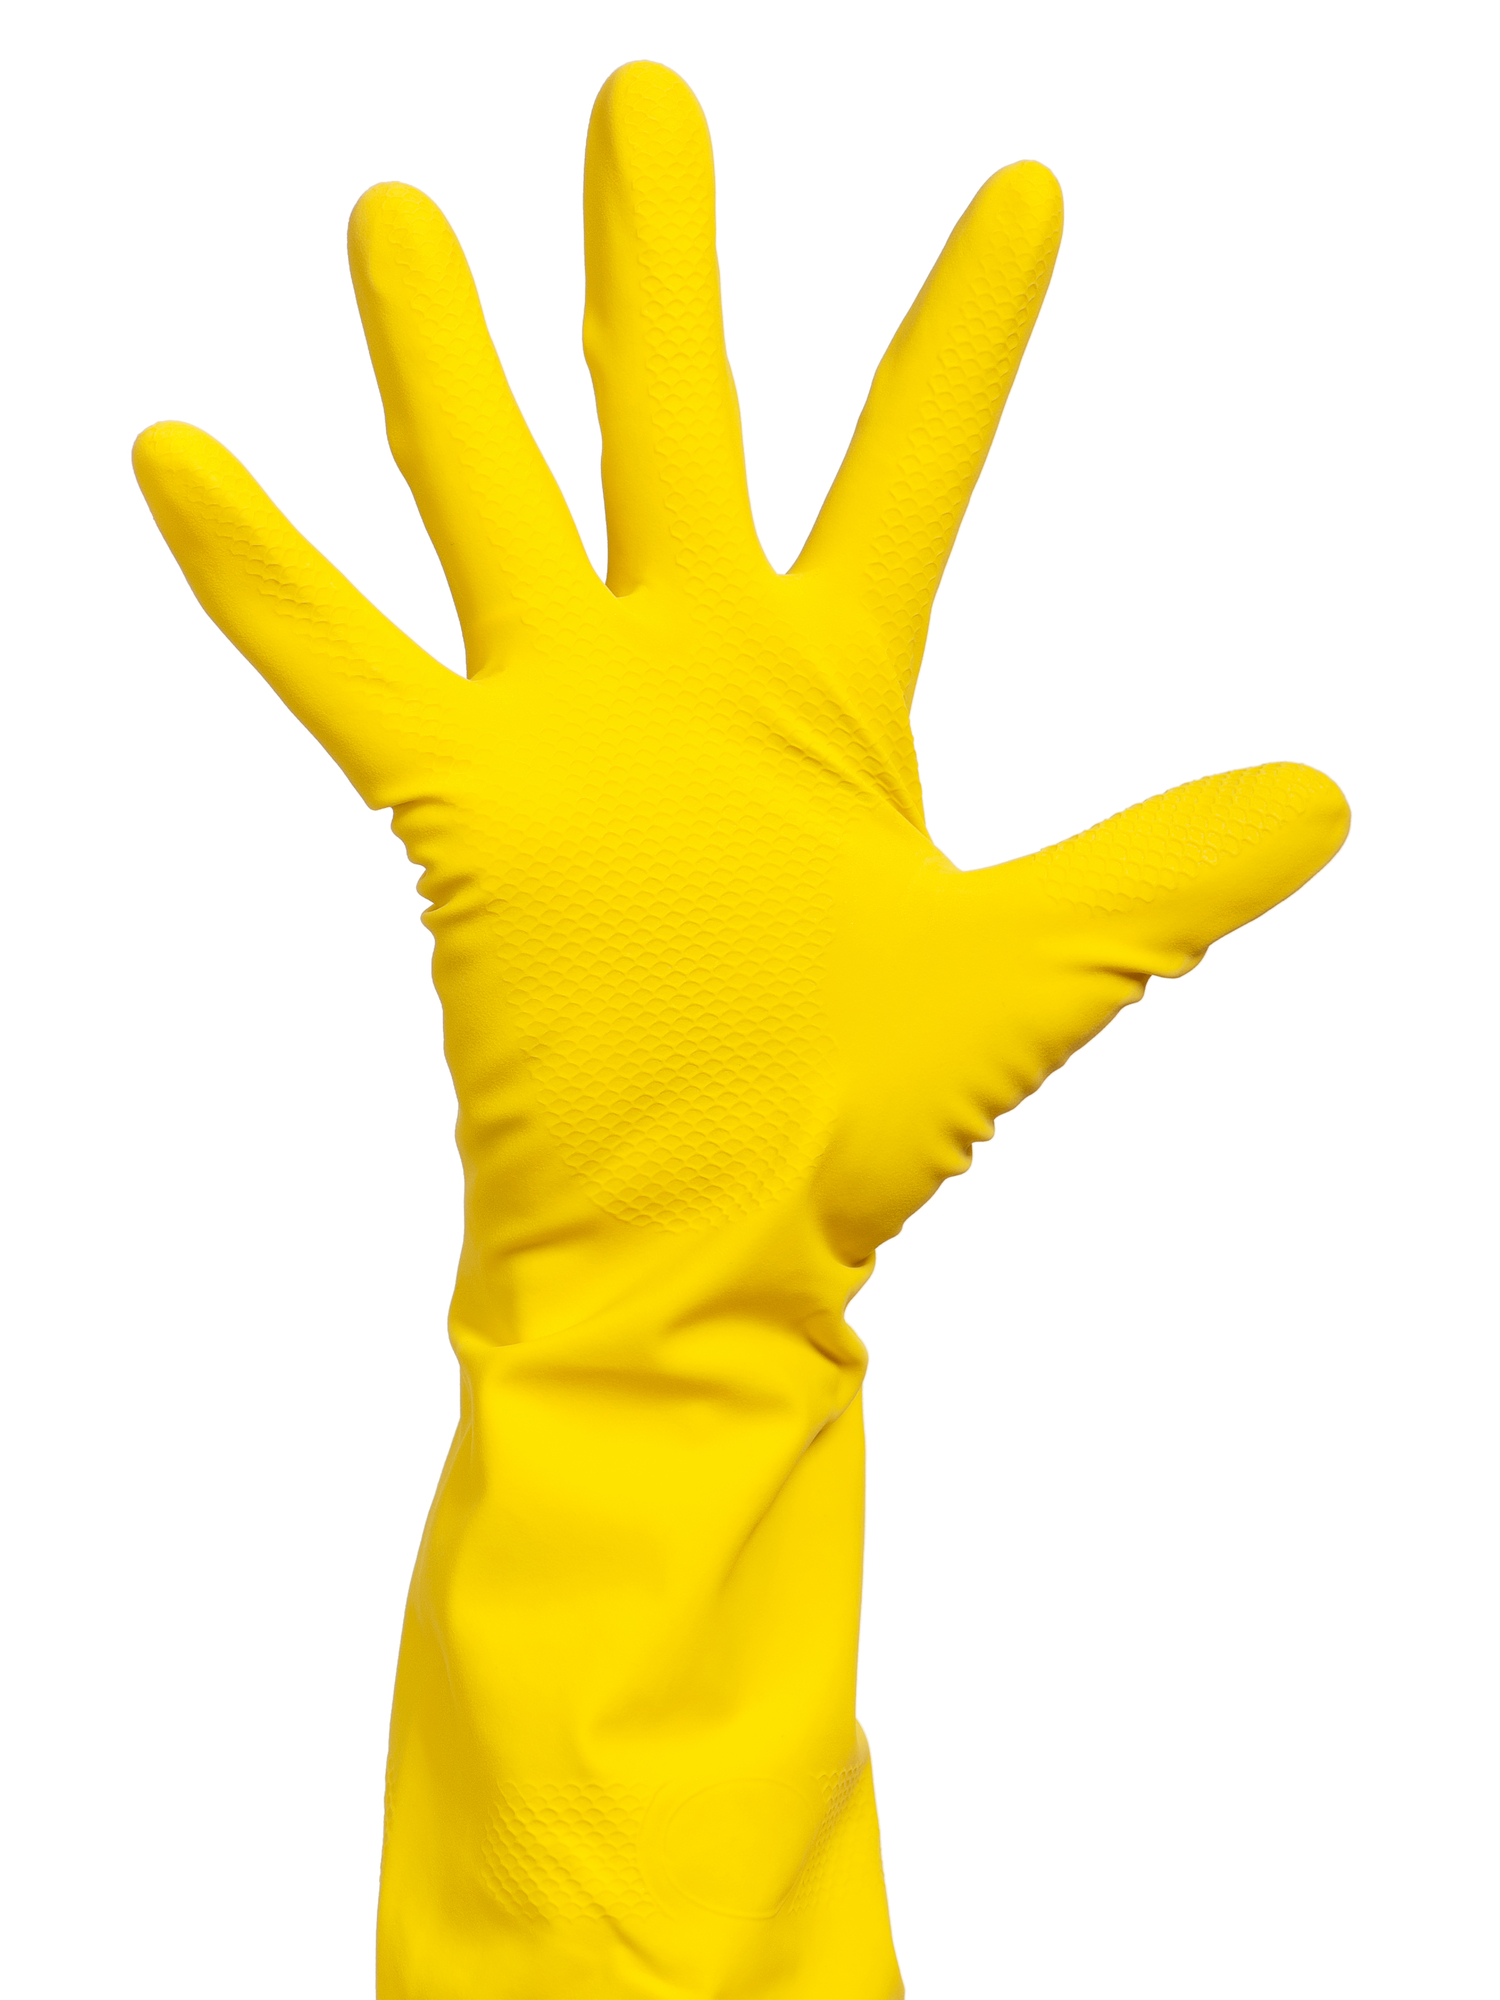 Желтое запястье. Рука жолтий. Желтые ладошки у ребенка. Перчатки желтая ладонь.